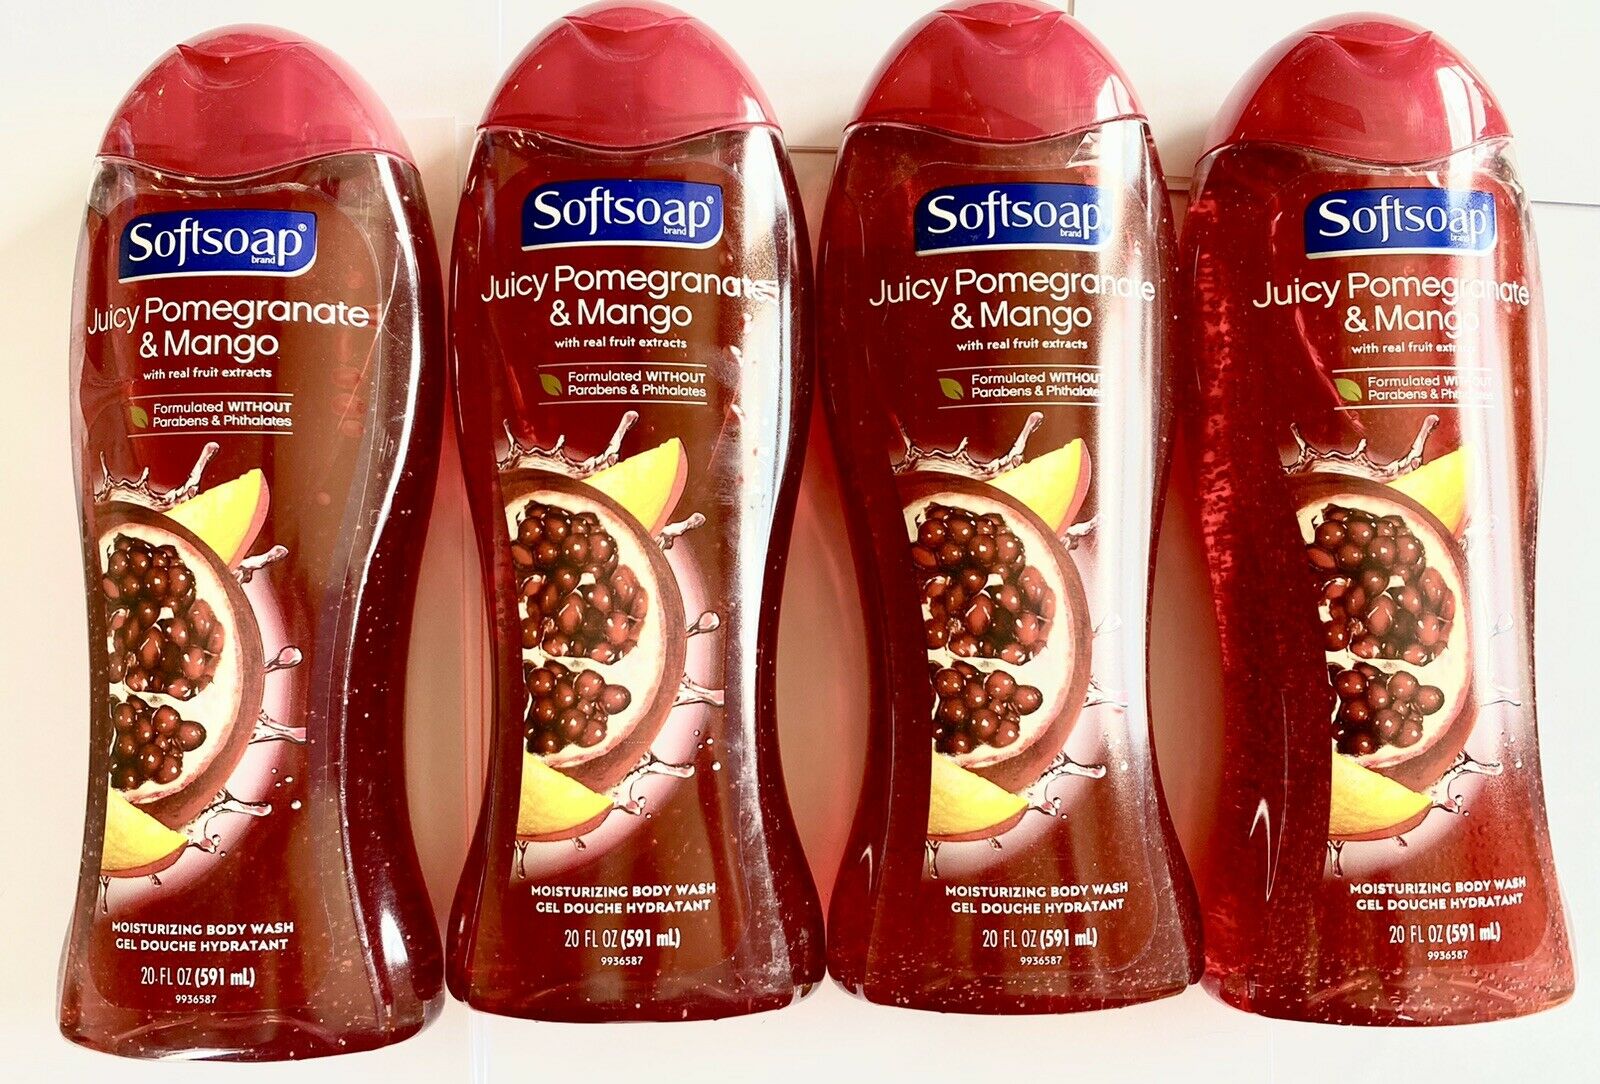 Lot Of 4 Softsoap Body Wash Moisturizing Pomegranate & Mango 20 Fl Oz each Soap